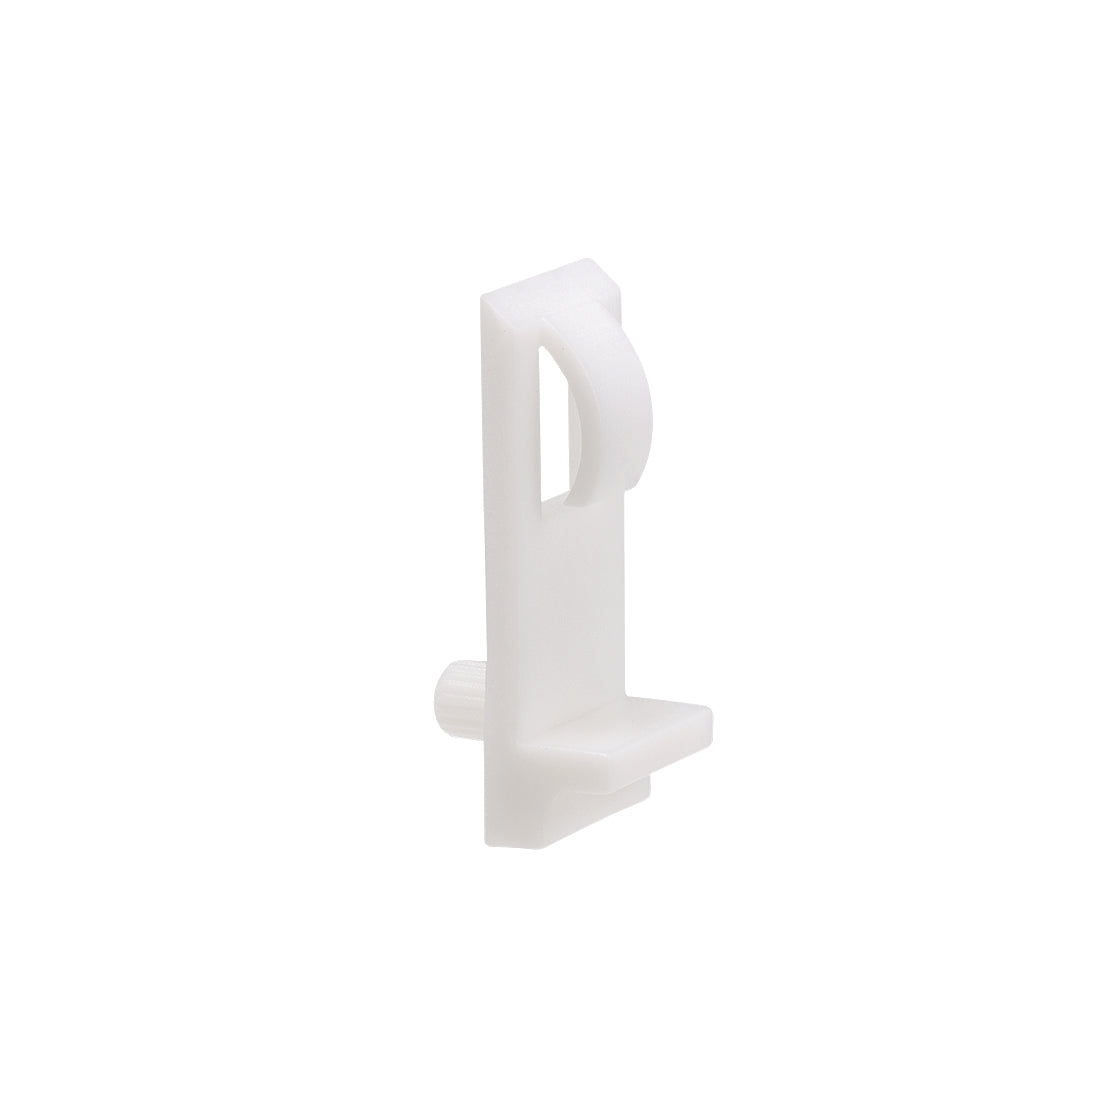 uxcell Uxcell Plastic Shelf Support Pegs,5mm Shelf -Locking,Cabinet Shelf Clips,Shelf Bracket Holder Peg,for Kitchen Furniture Book Shelves Supplies,White,20pcs